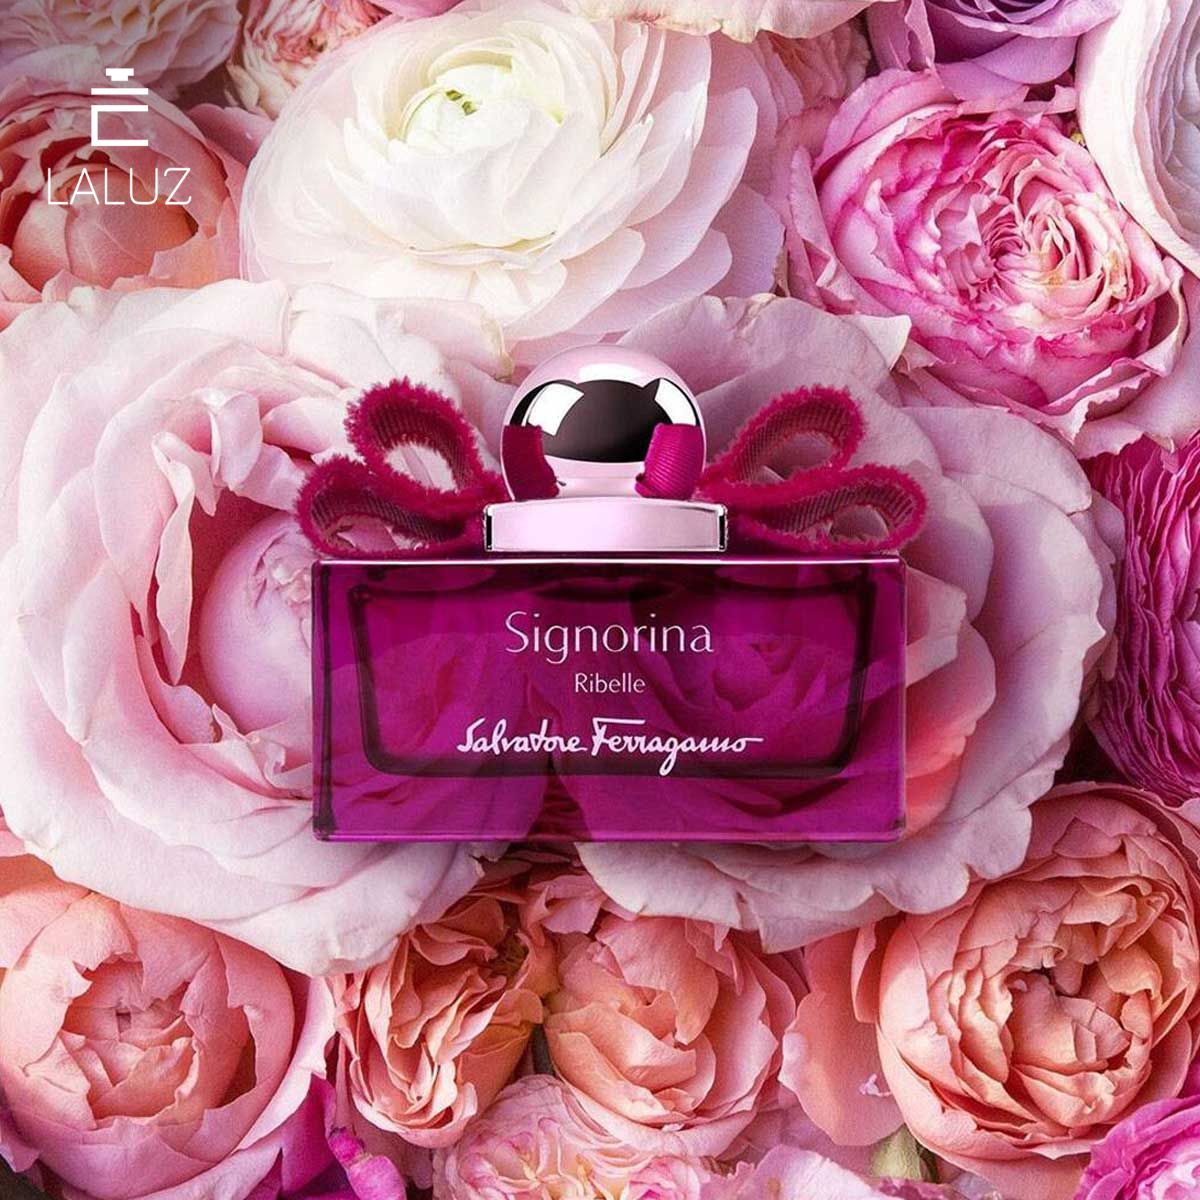 Salvatore Ferragamo nước hoa Signorina Ribelle màu hồng ngọt bắt mắt